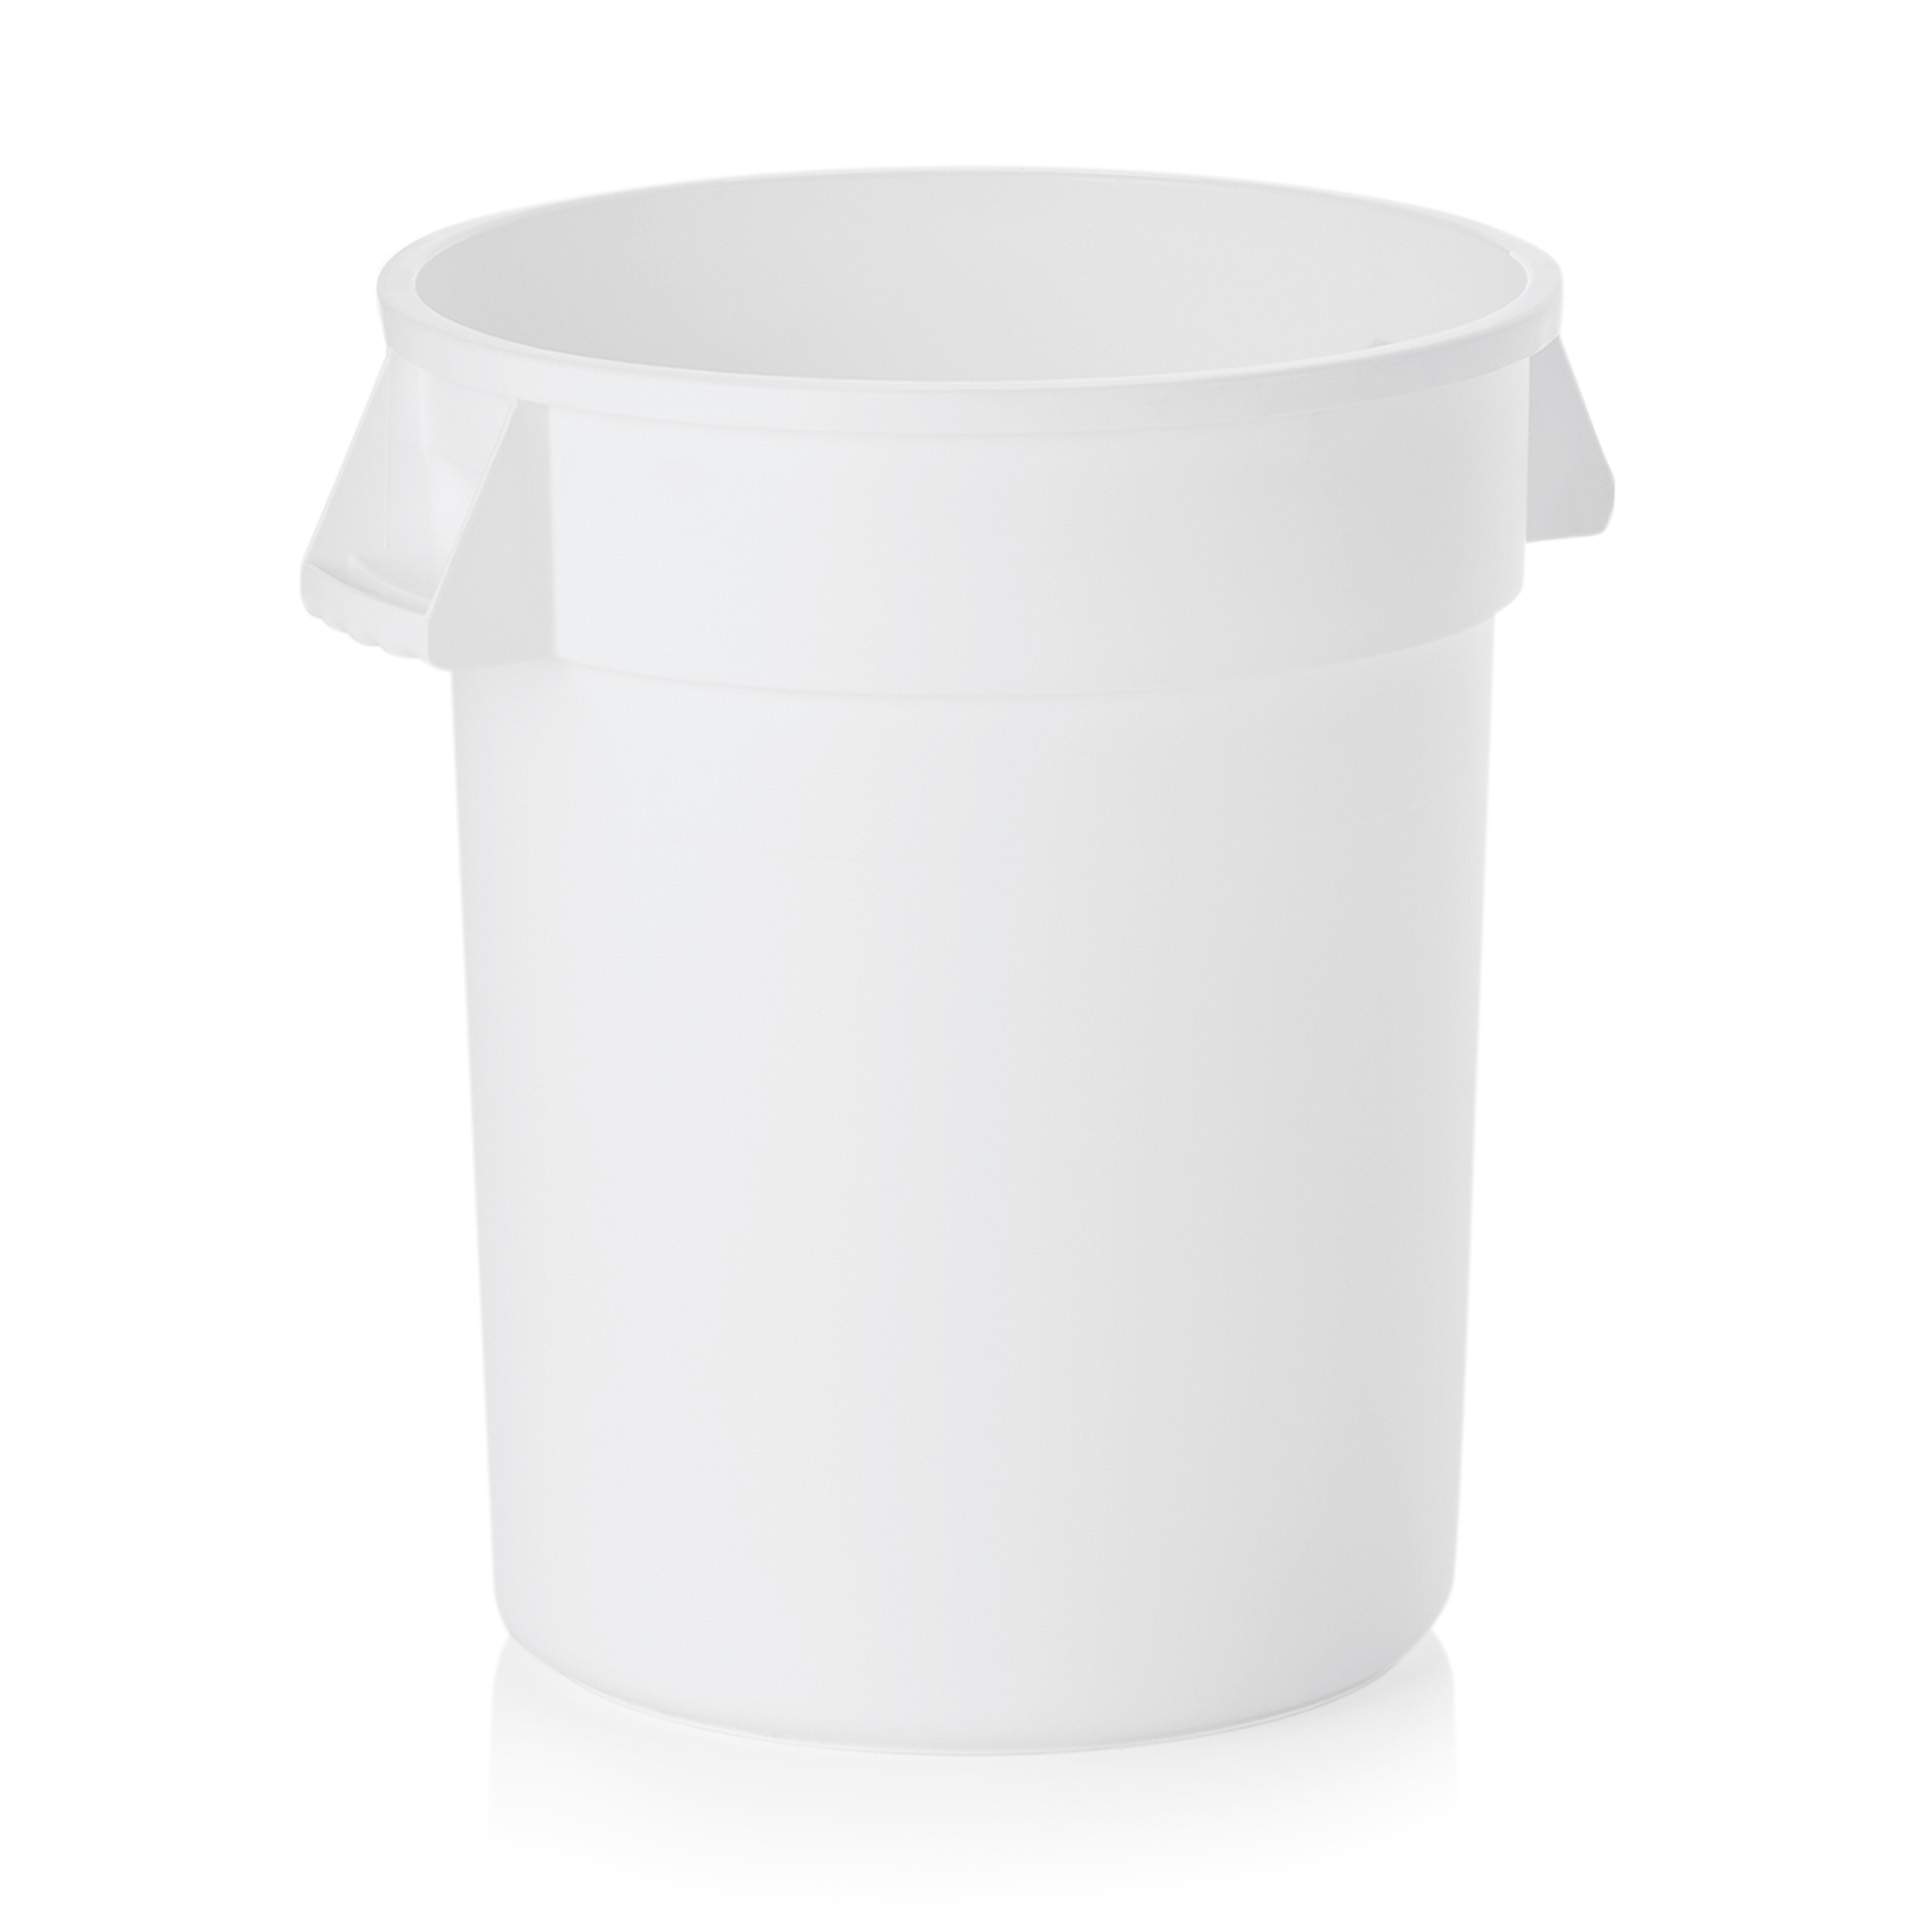 Zutaten- / Lagerbehälter - Deckel aufschiebbar - Abm. 59 cm - Ø 49,5 cm - Inhalt 76 l - Polyethylen - 9217760-A